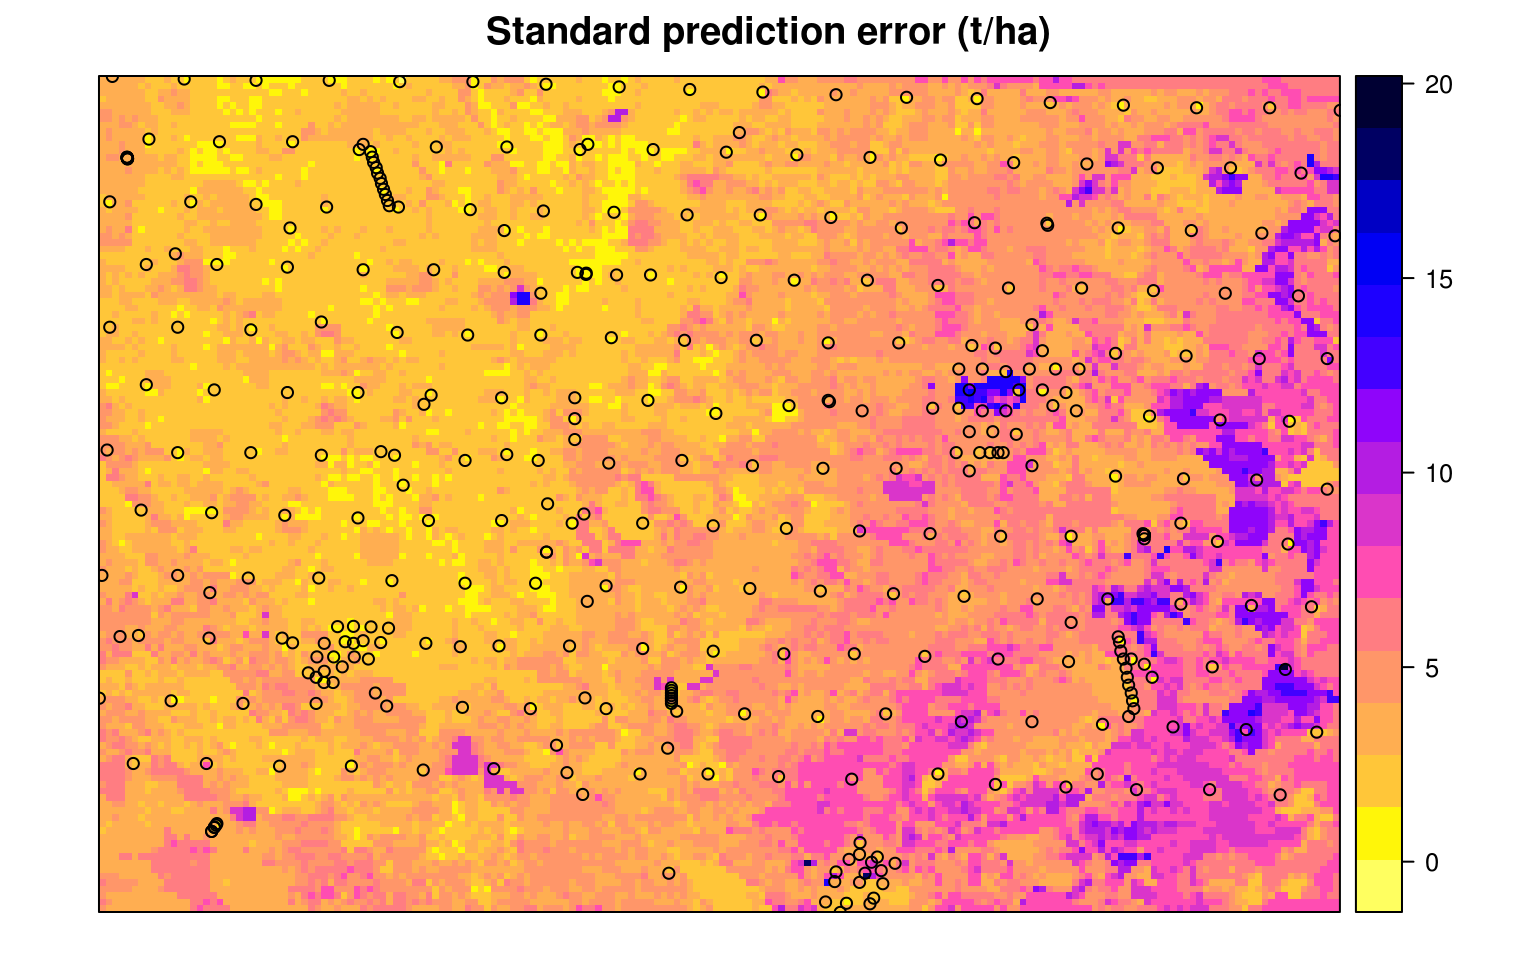 The prediction error map for the Edgeroi data set.